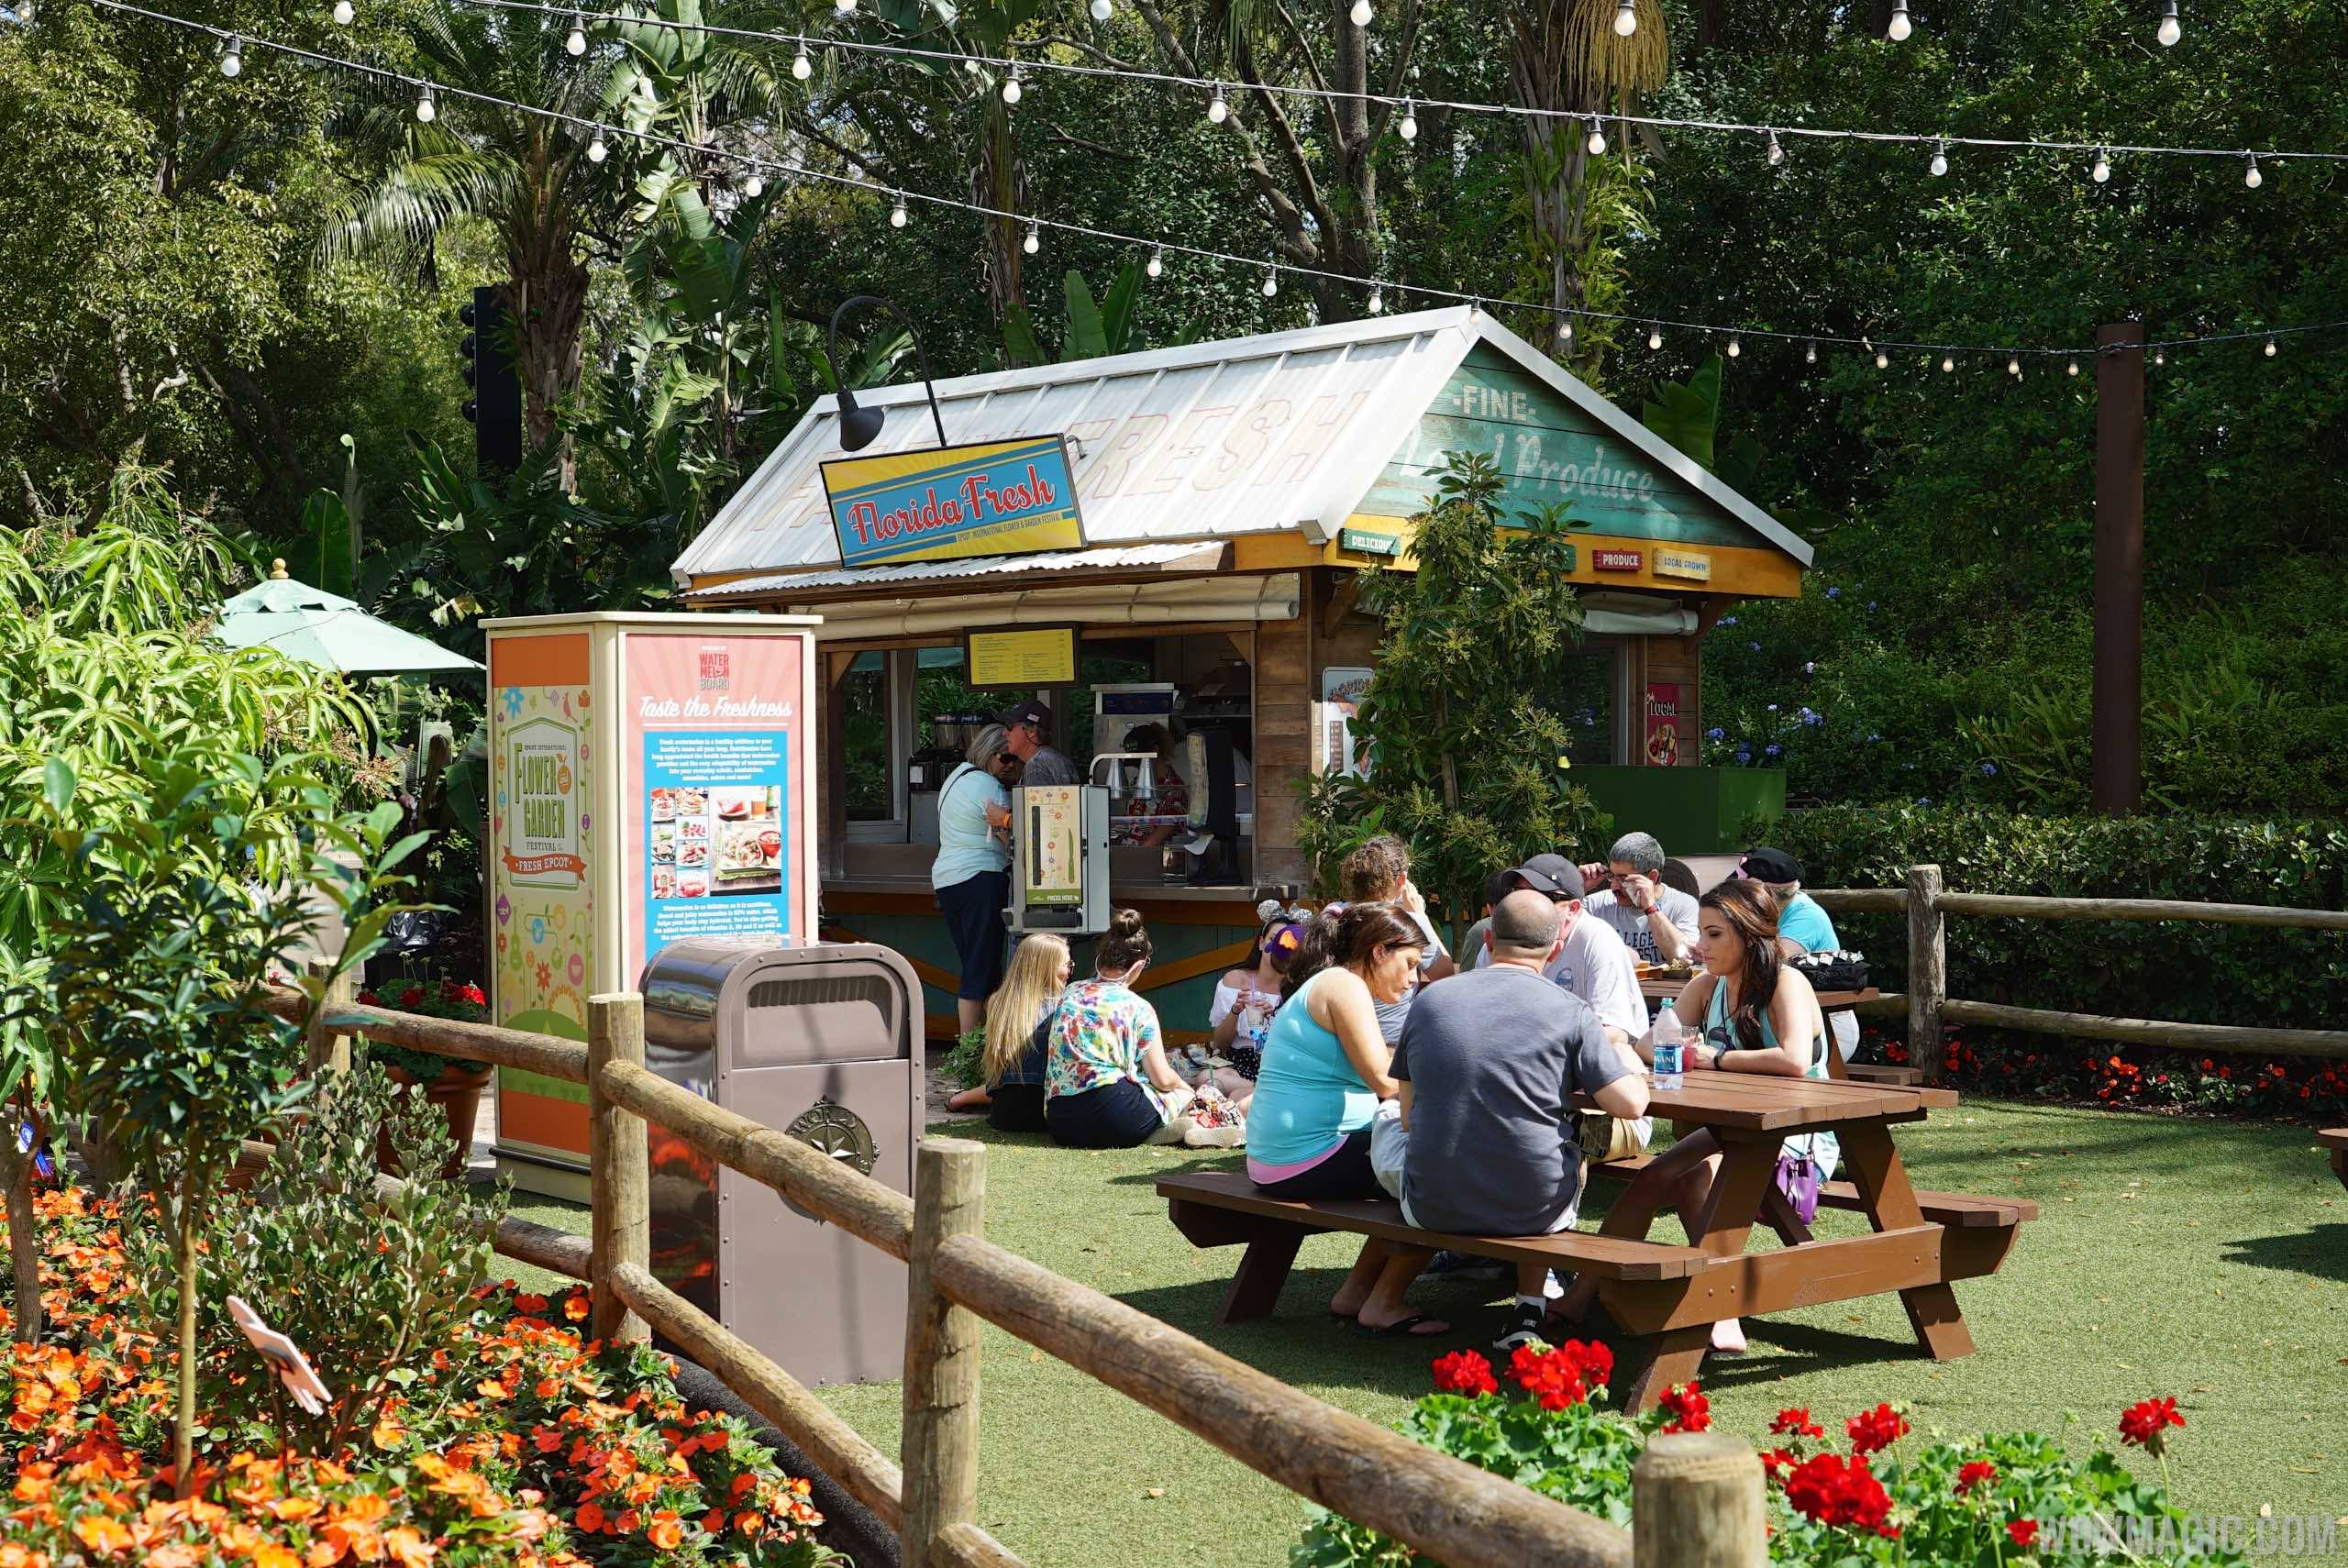 2015 Epcot Flower and Garden Festival Outdoor Kitchen kiosks and menus